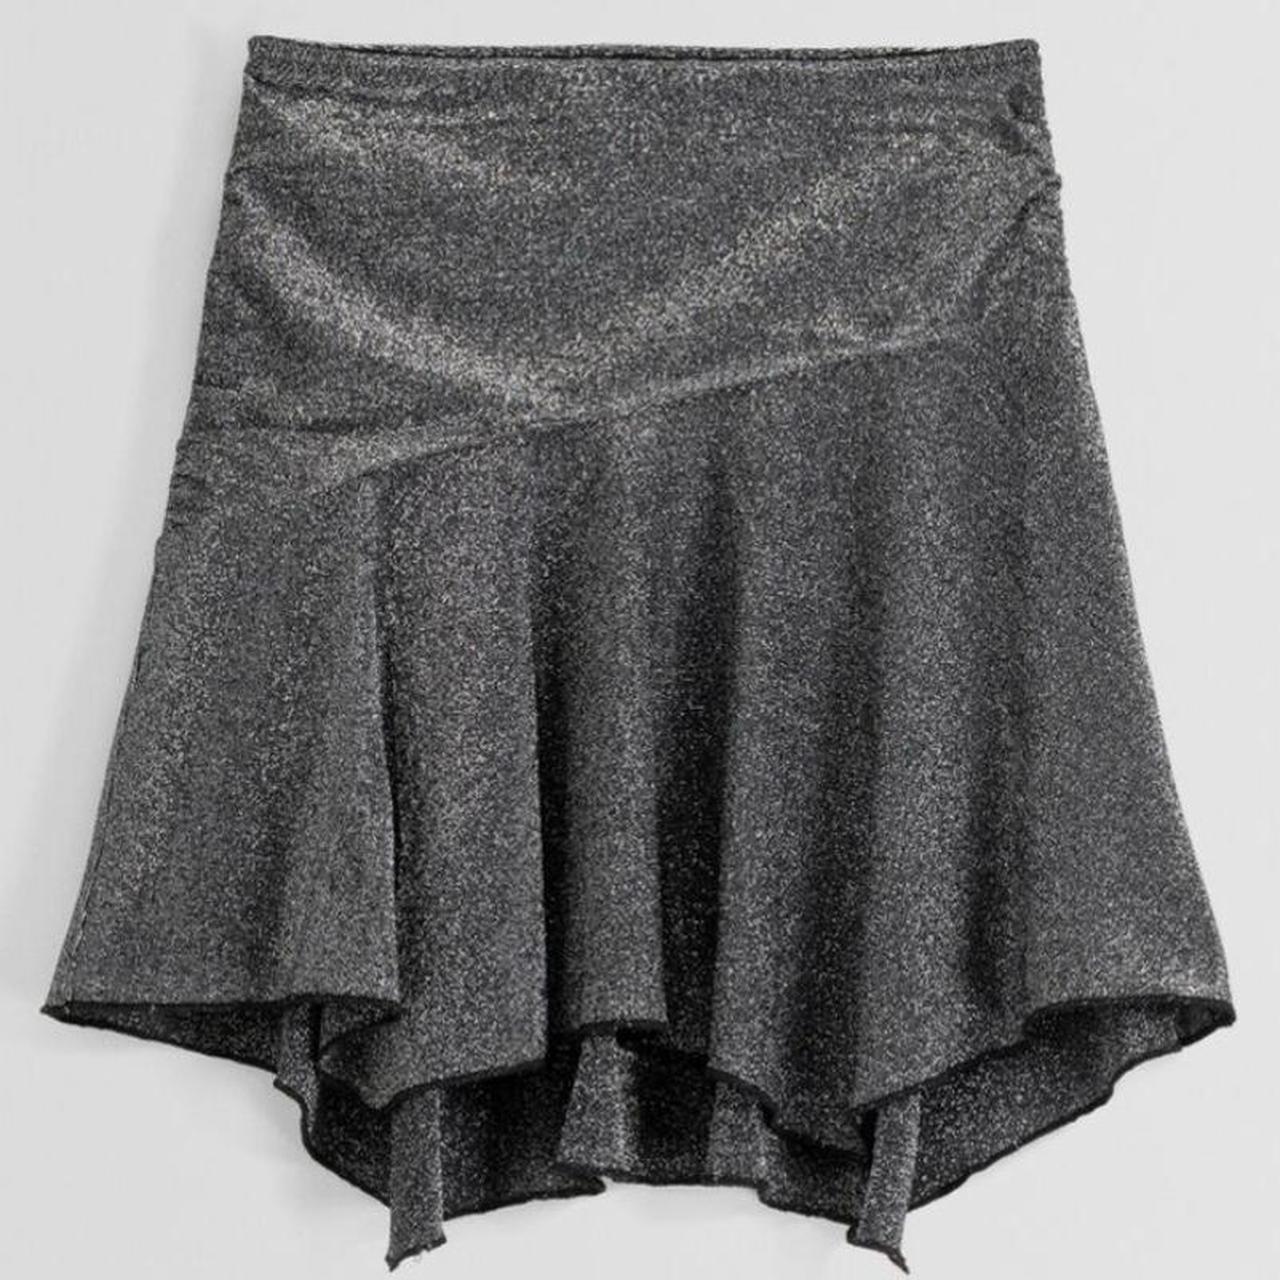 Bershka sparkling mini skirt - Depop